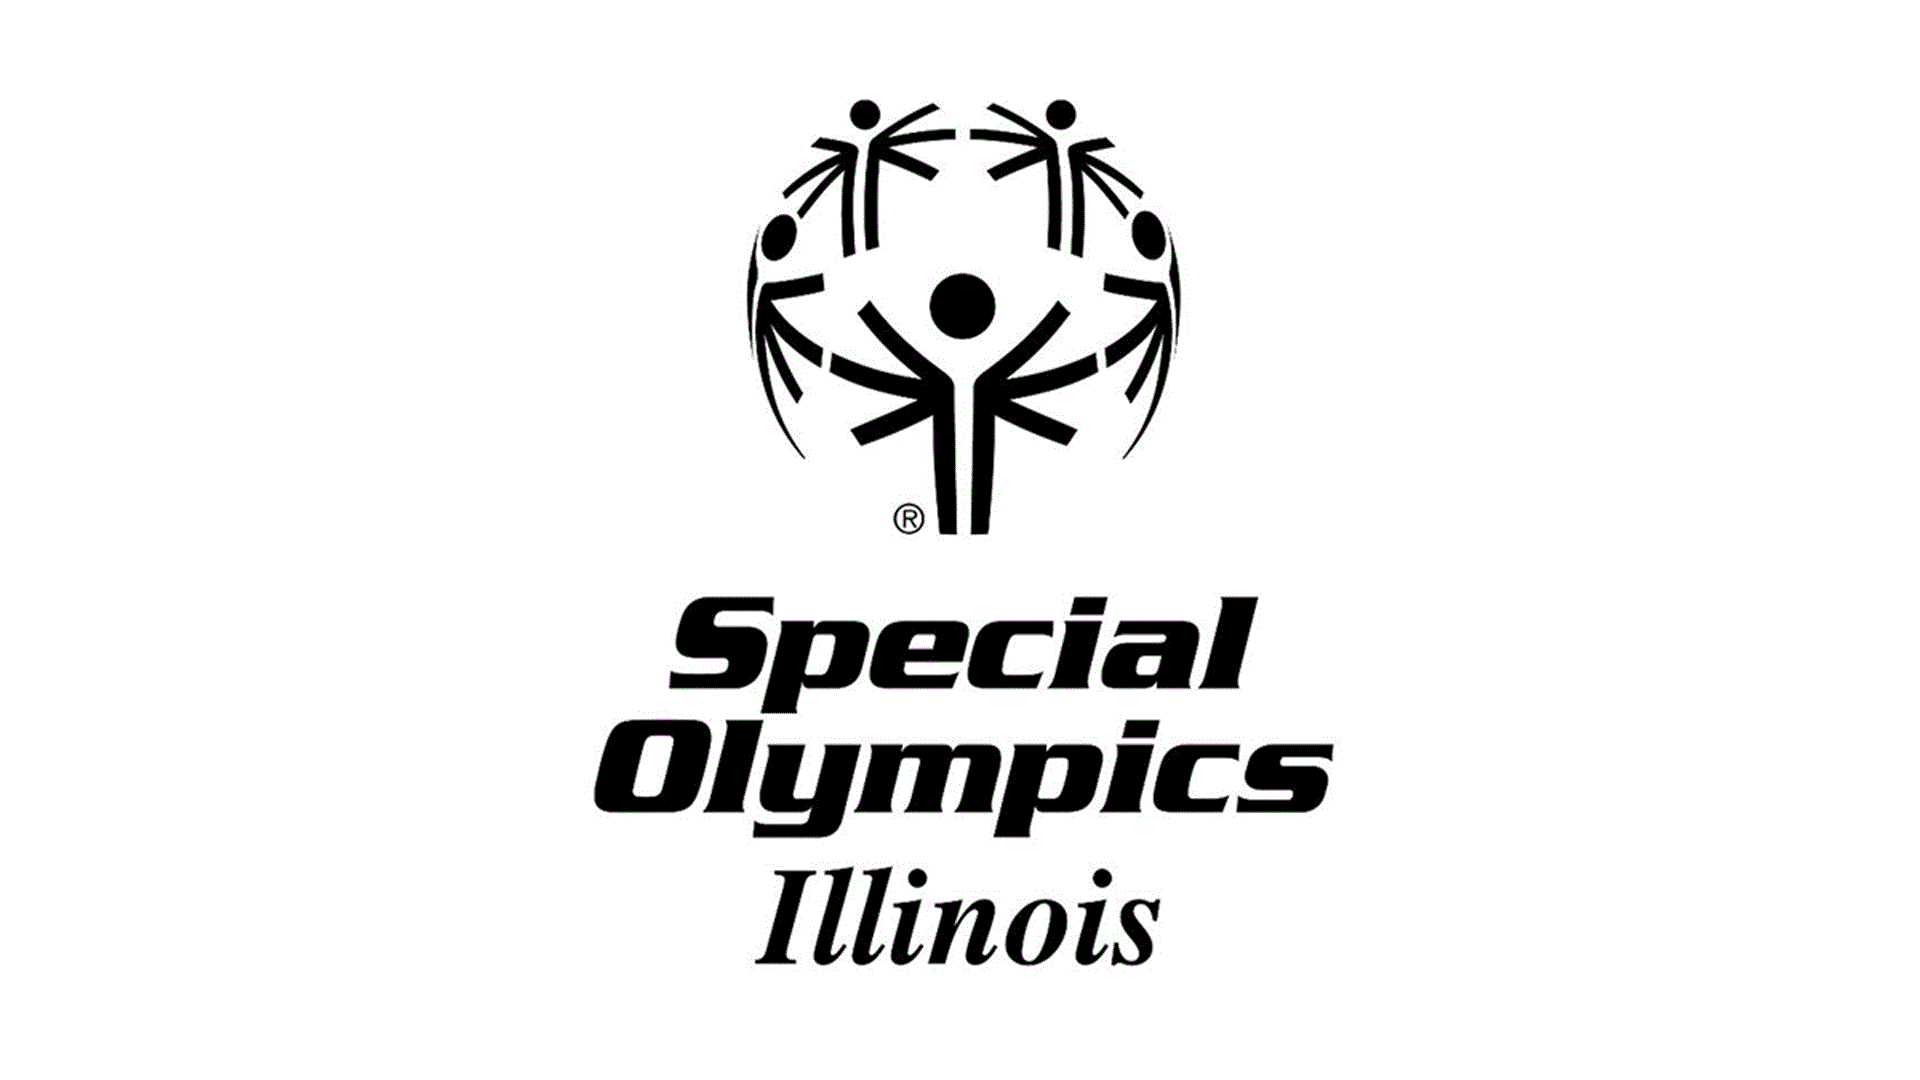 special-olympics-illinois-area-4-announced-as-three-degree-recipient